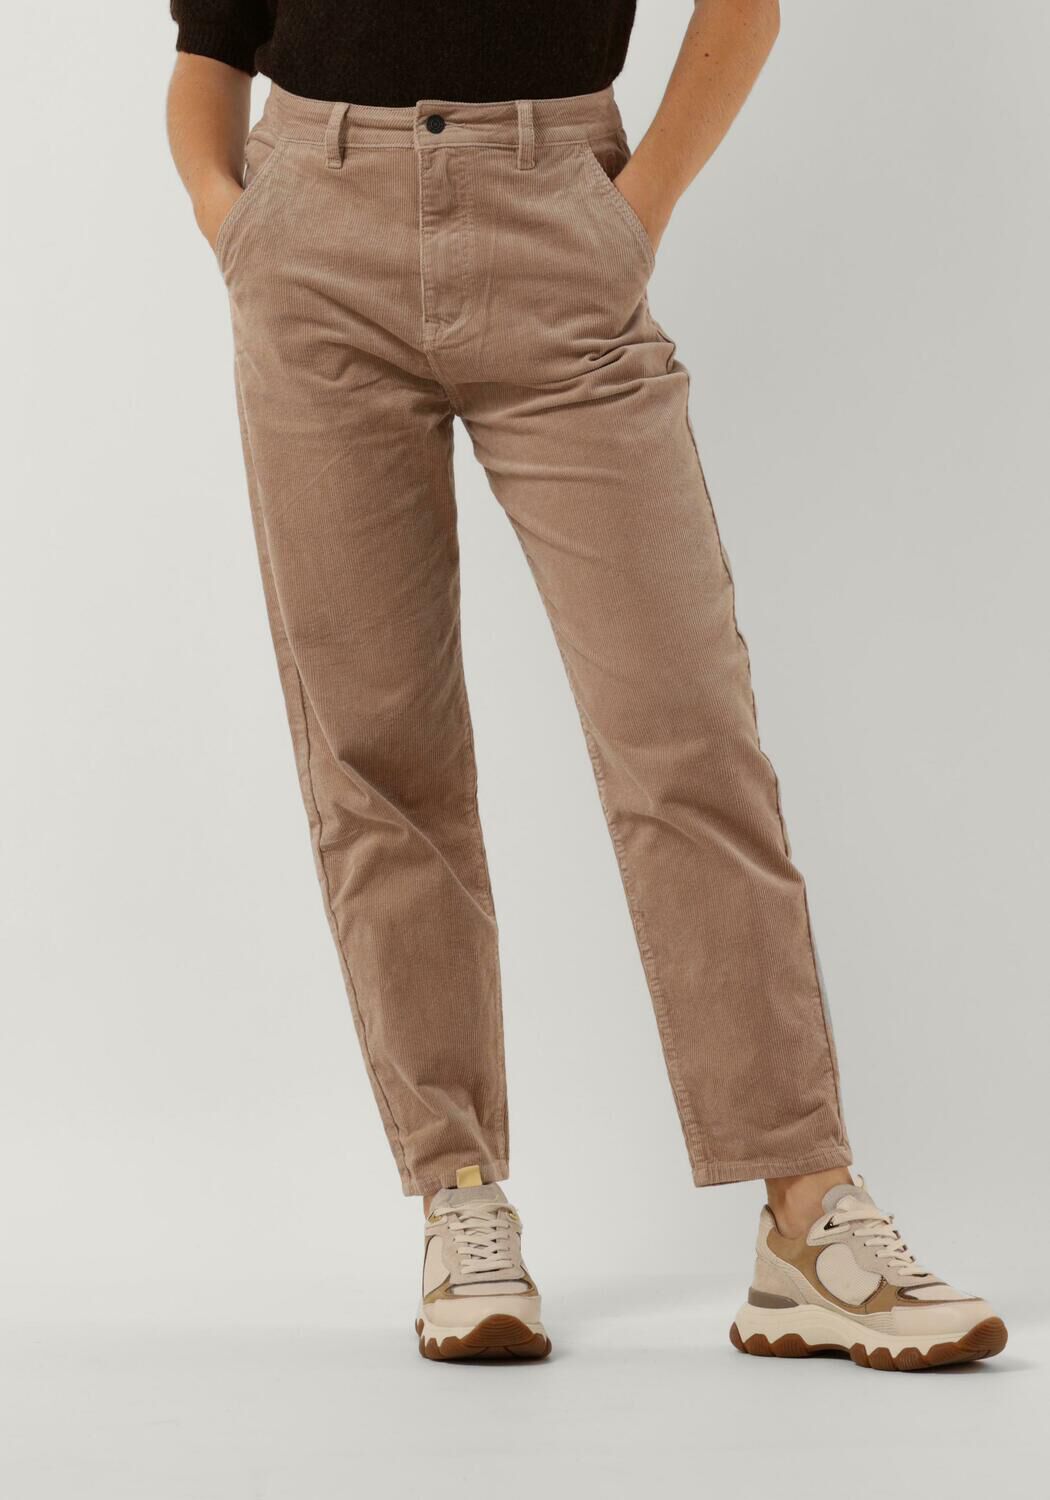 bzr Hot pants khaki casual uitstraling Mode Korte broeken Hot pants 